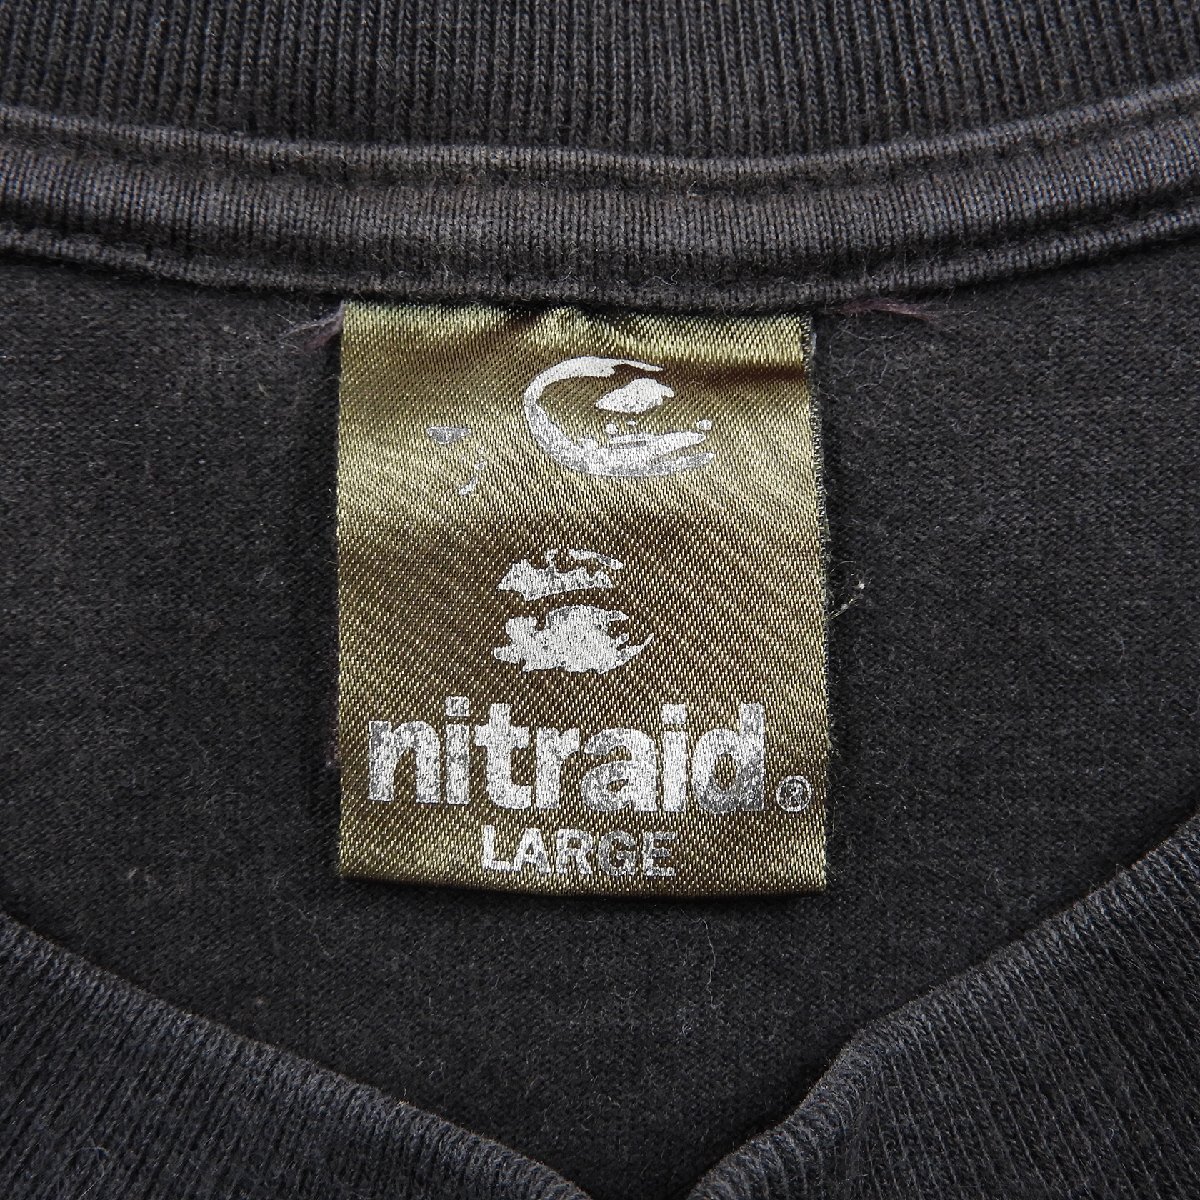 NITRAID Nitraid × EXPANSION расширение Mike Thai son короткий рукав футболка Size L #19178 стоимость доставки 360 иен casual Street Tee